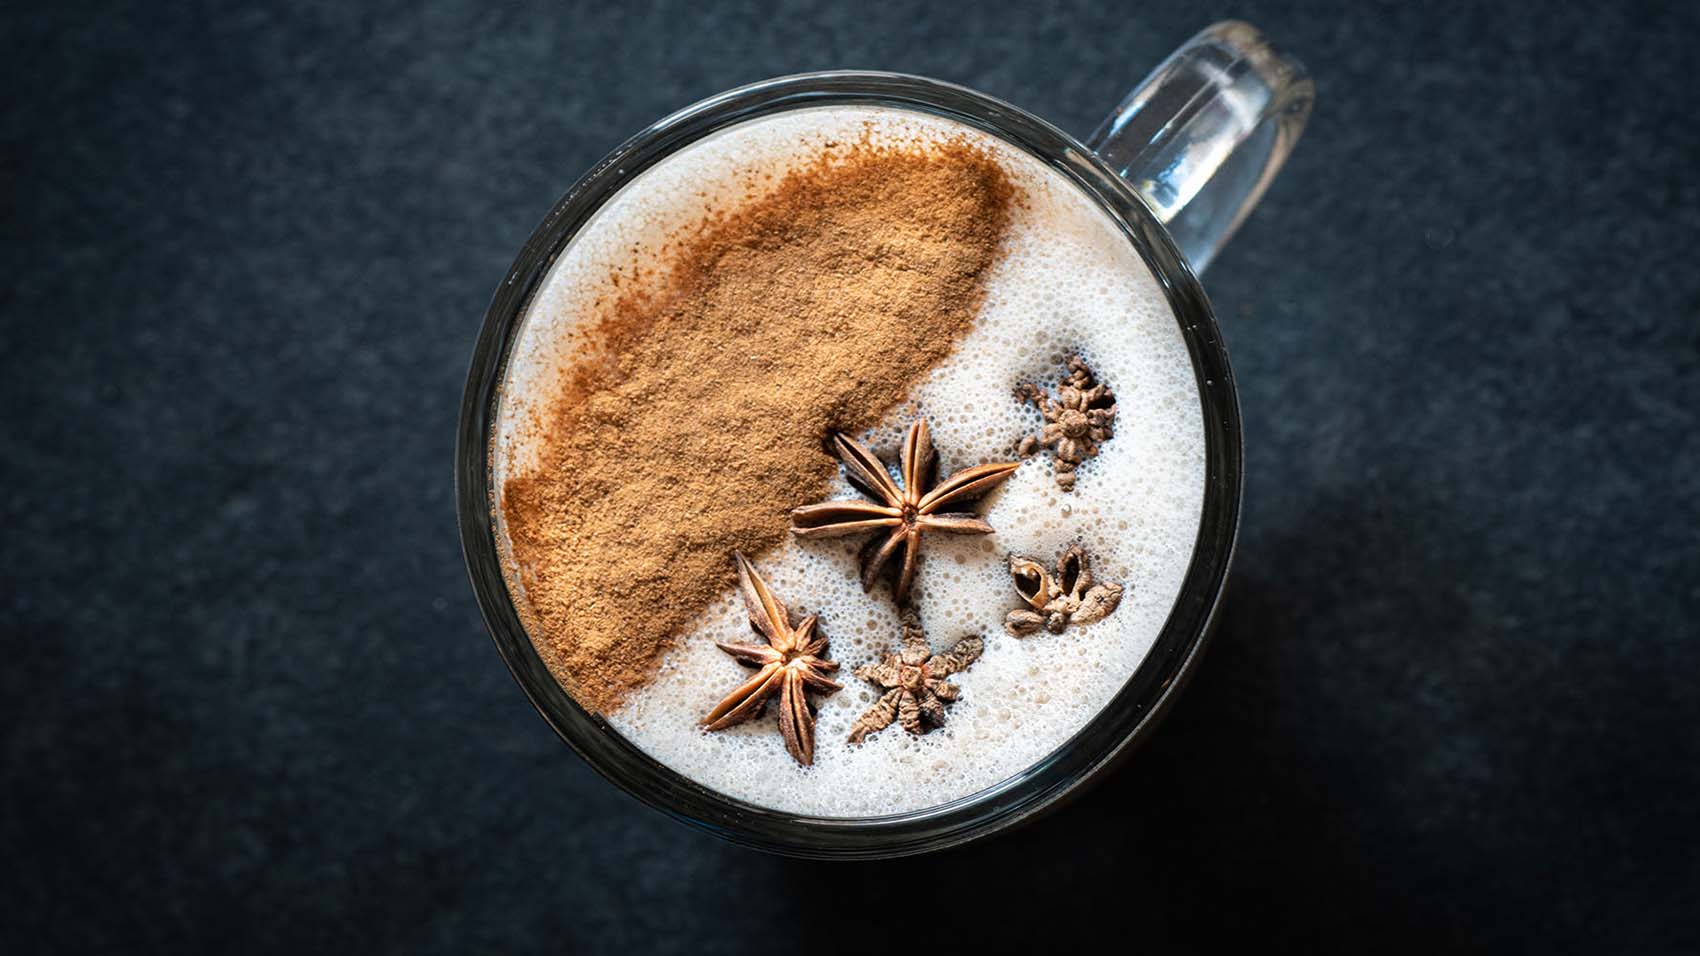 drink chai latte as a coffee alternative